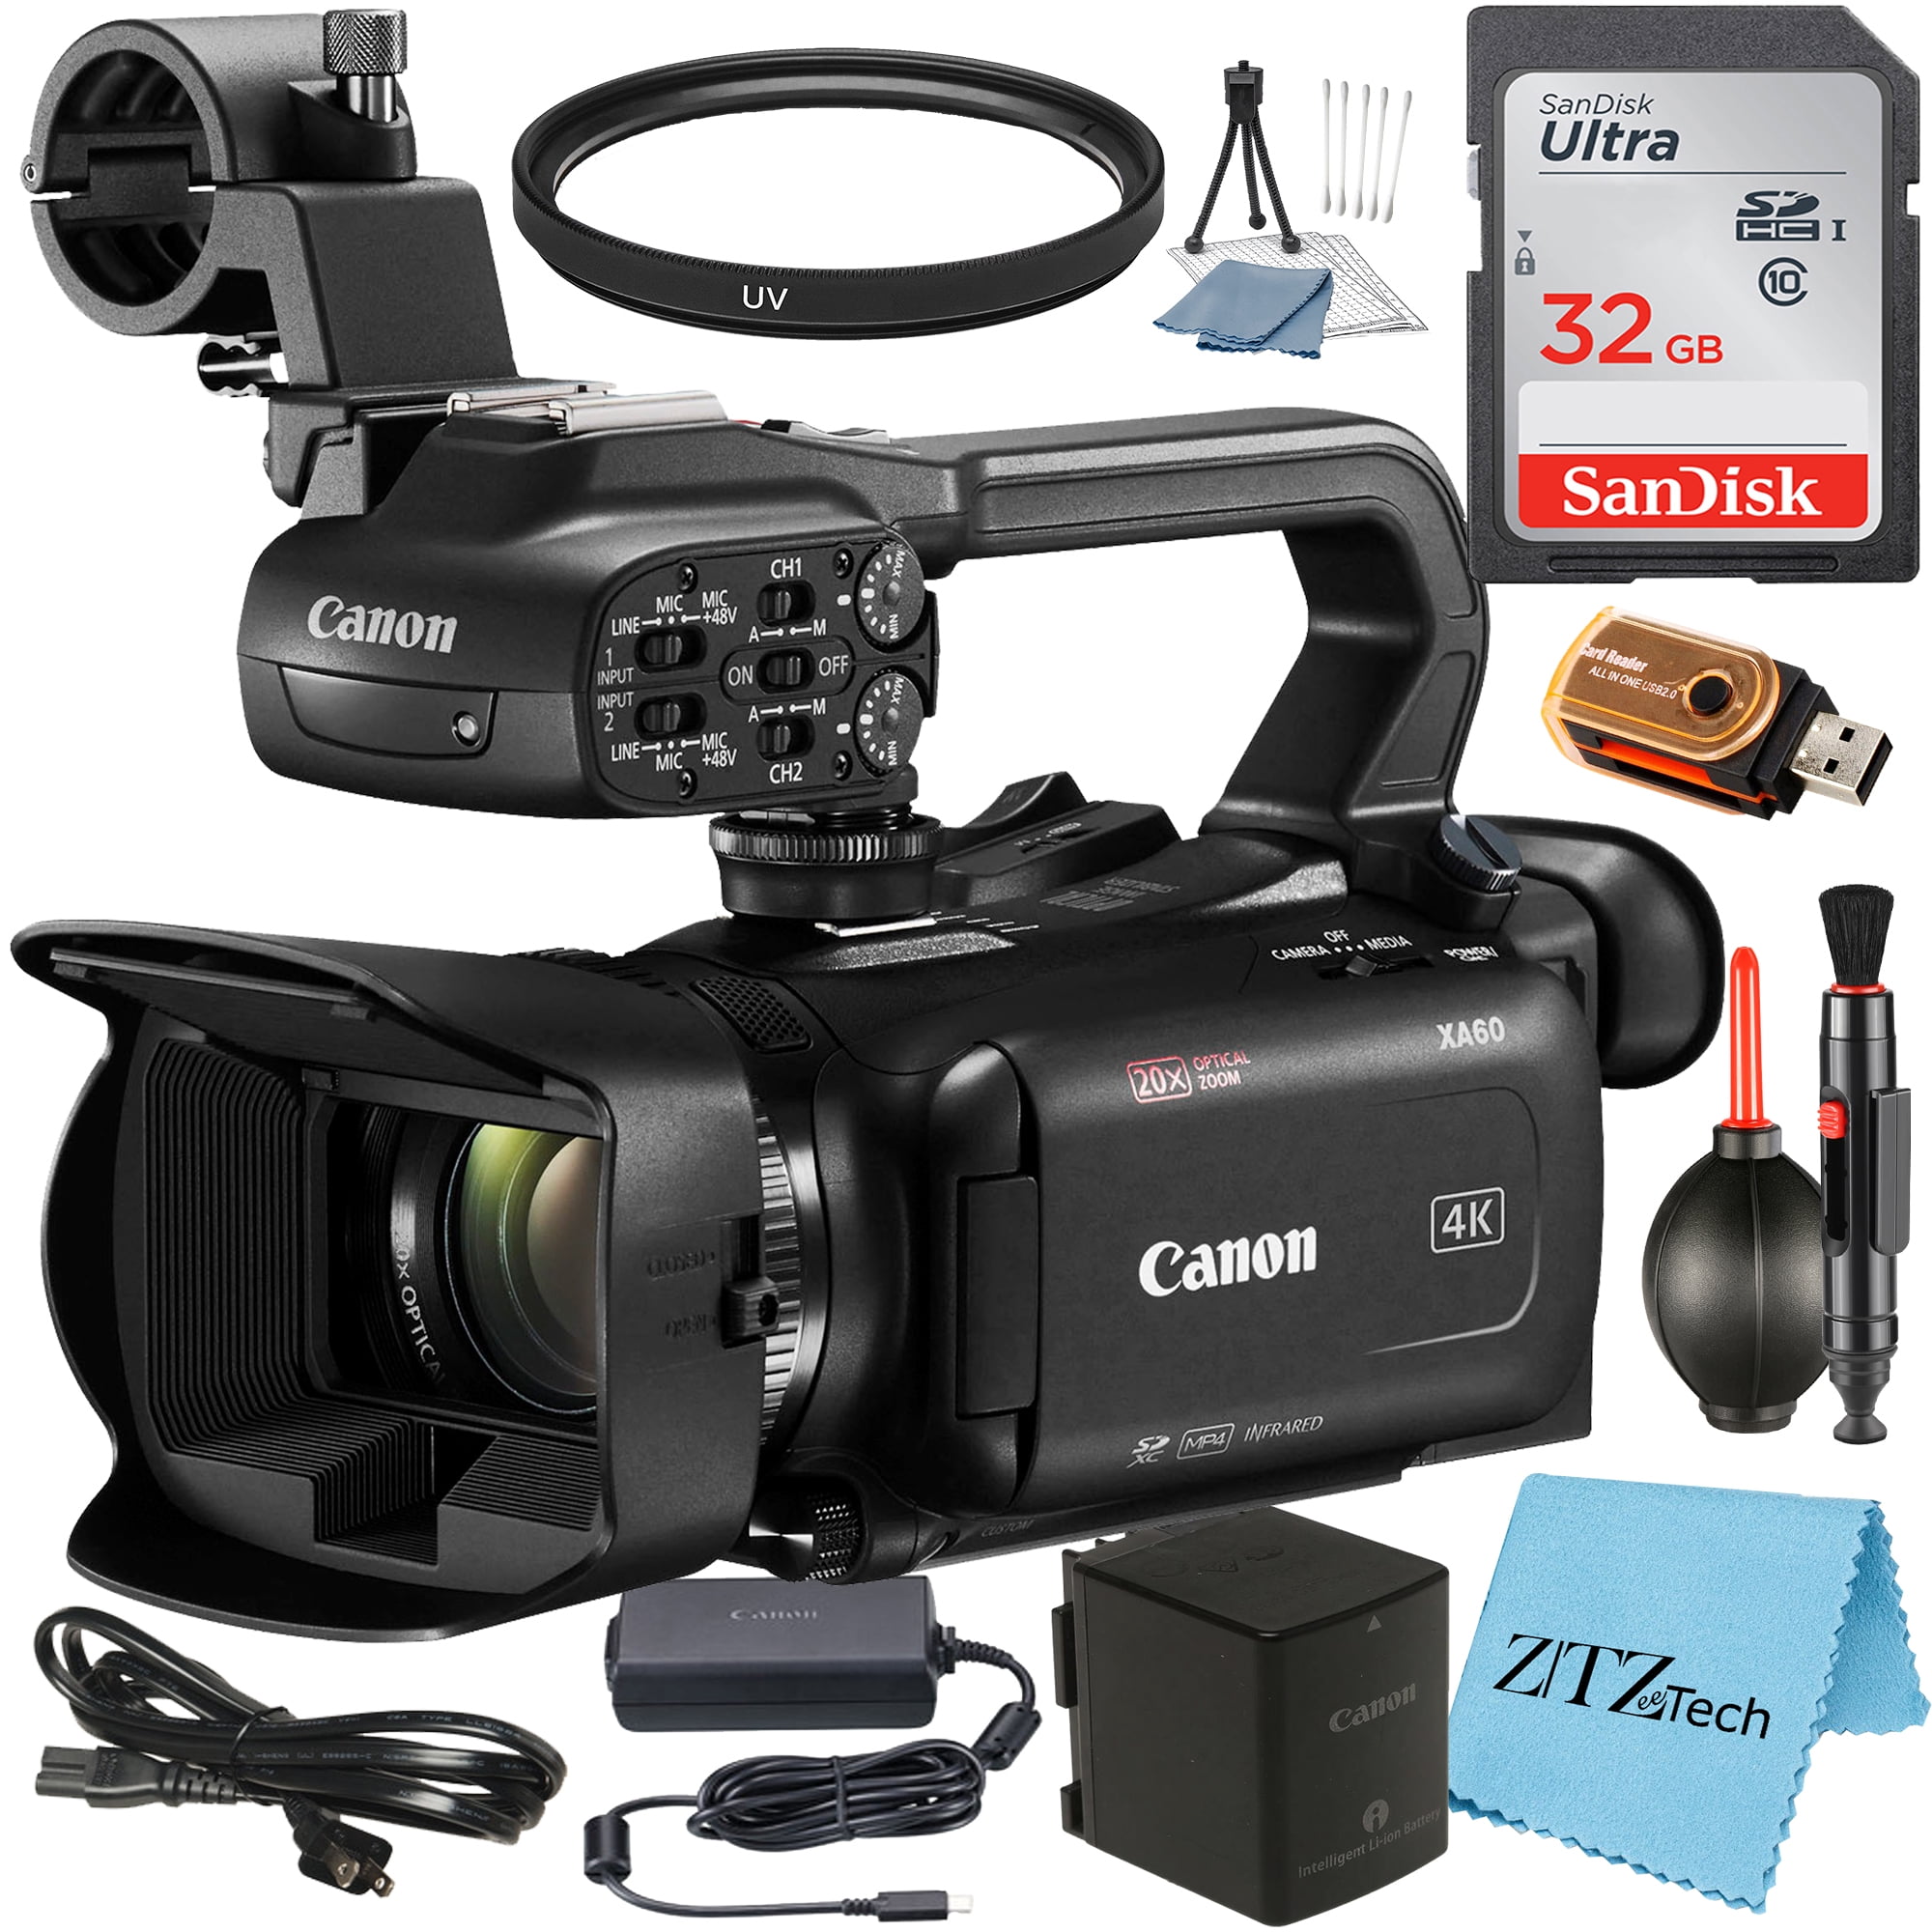 Canon XA60 Professional UHD 4K Camcorder with SanDisk 32GB Memory Card UV Fliter ZeeTech Accessory Bundle - Walmart.com